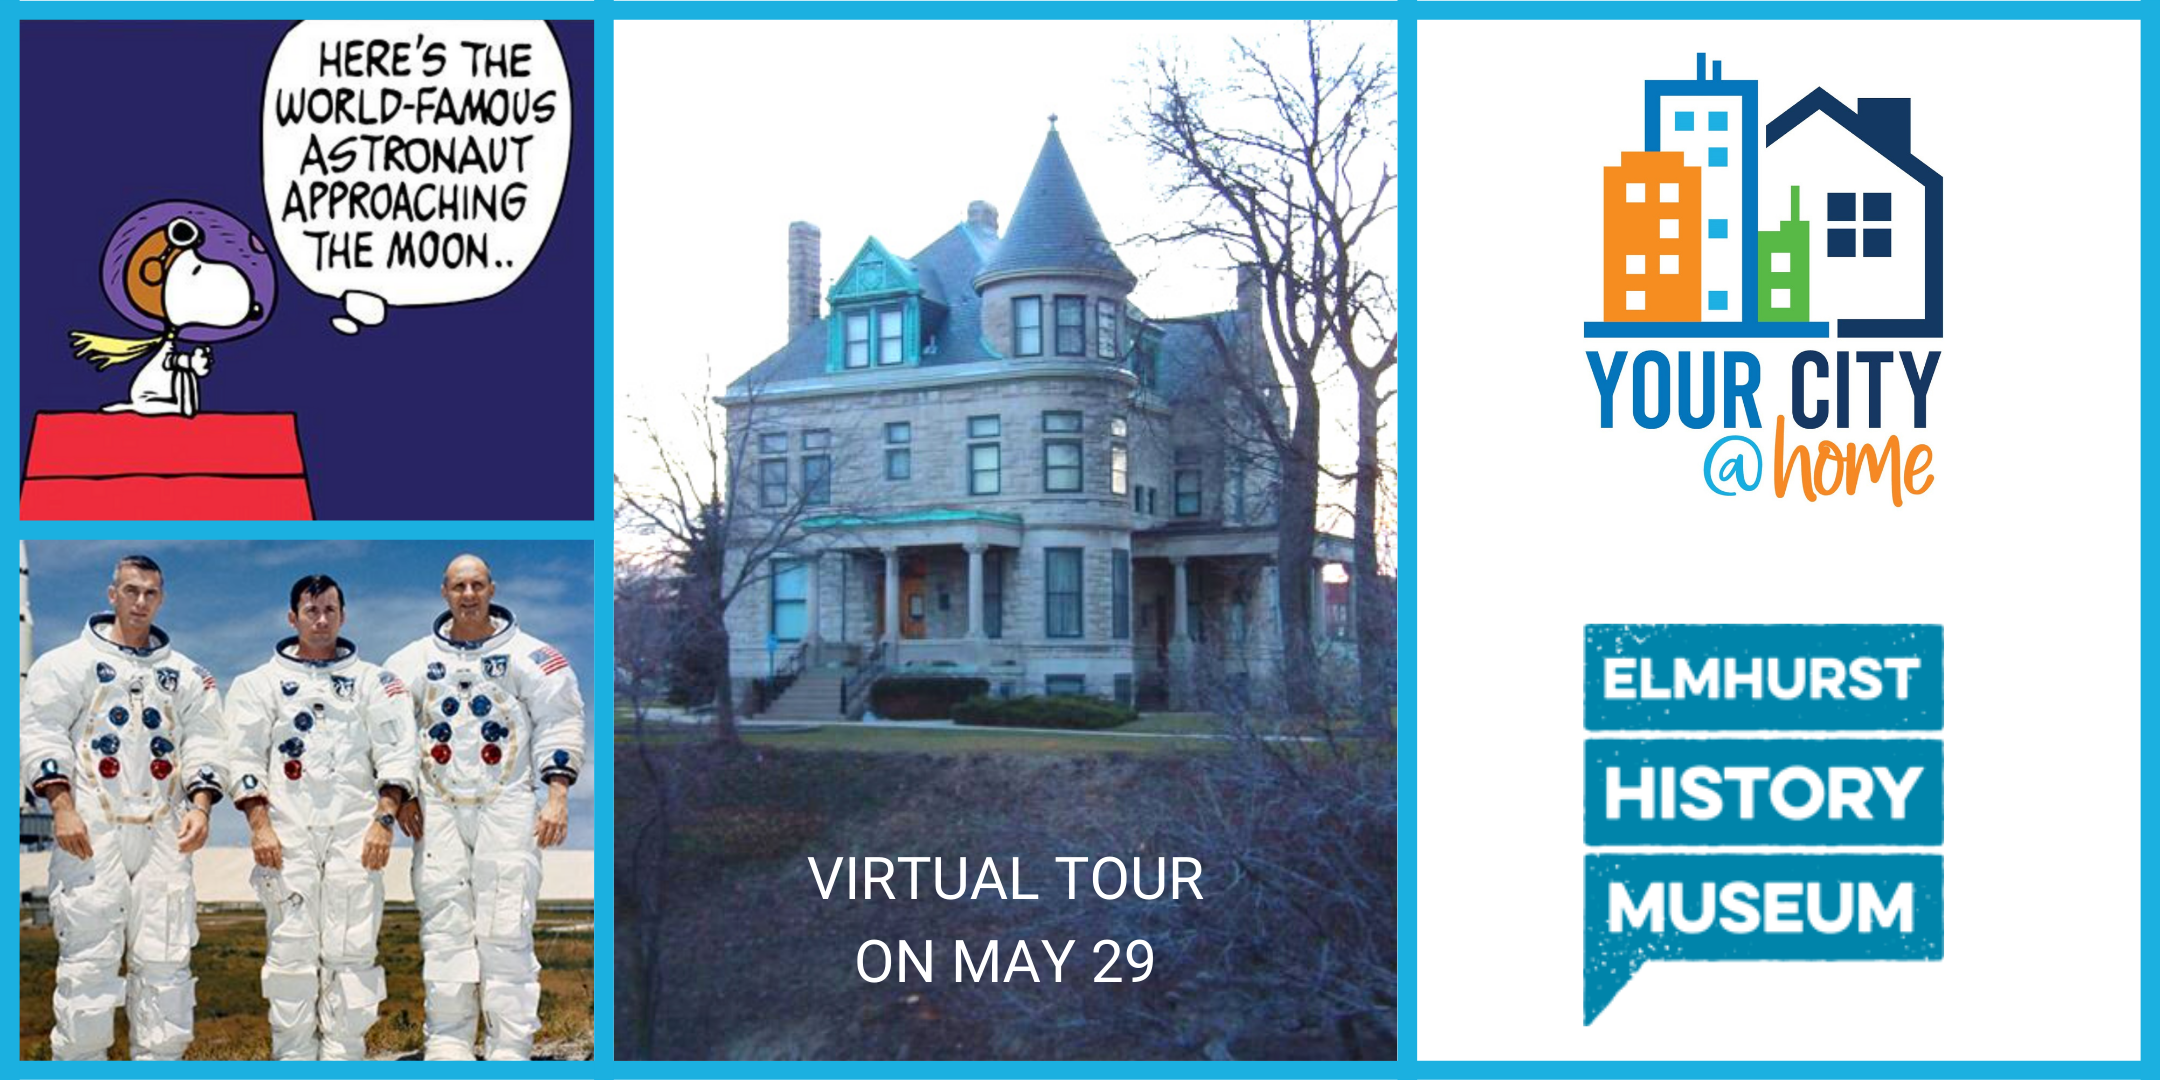 Your City @Home Virtual Tour Elmhurst History Museum image